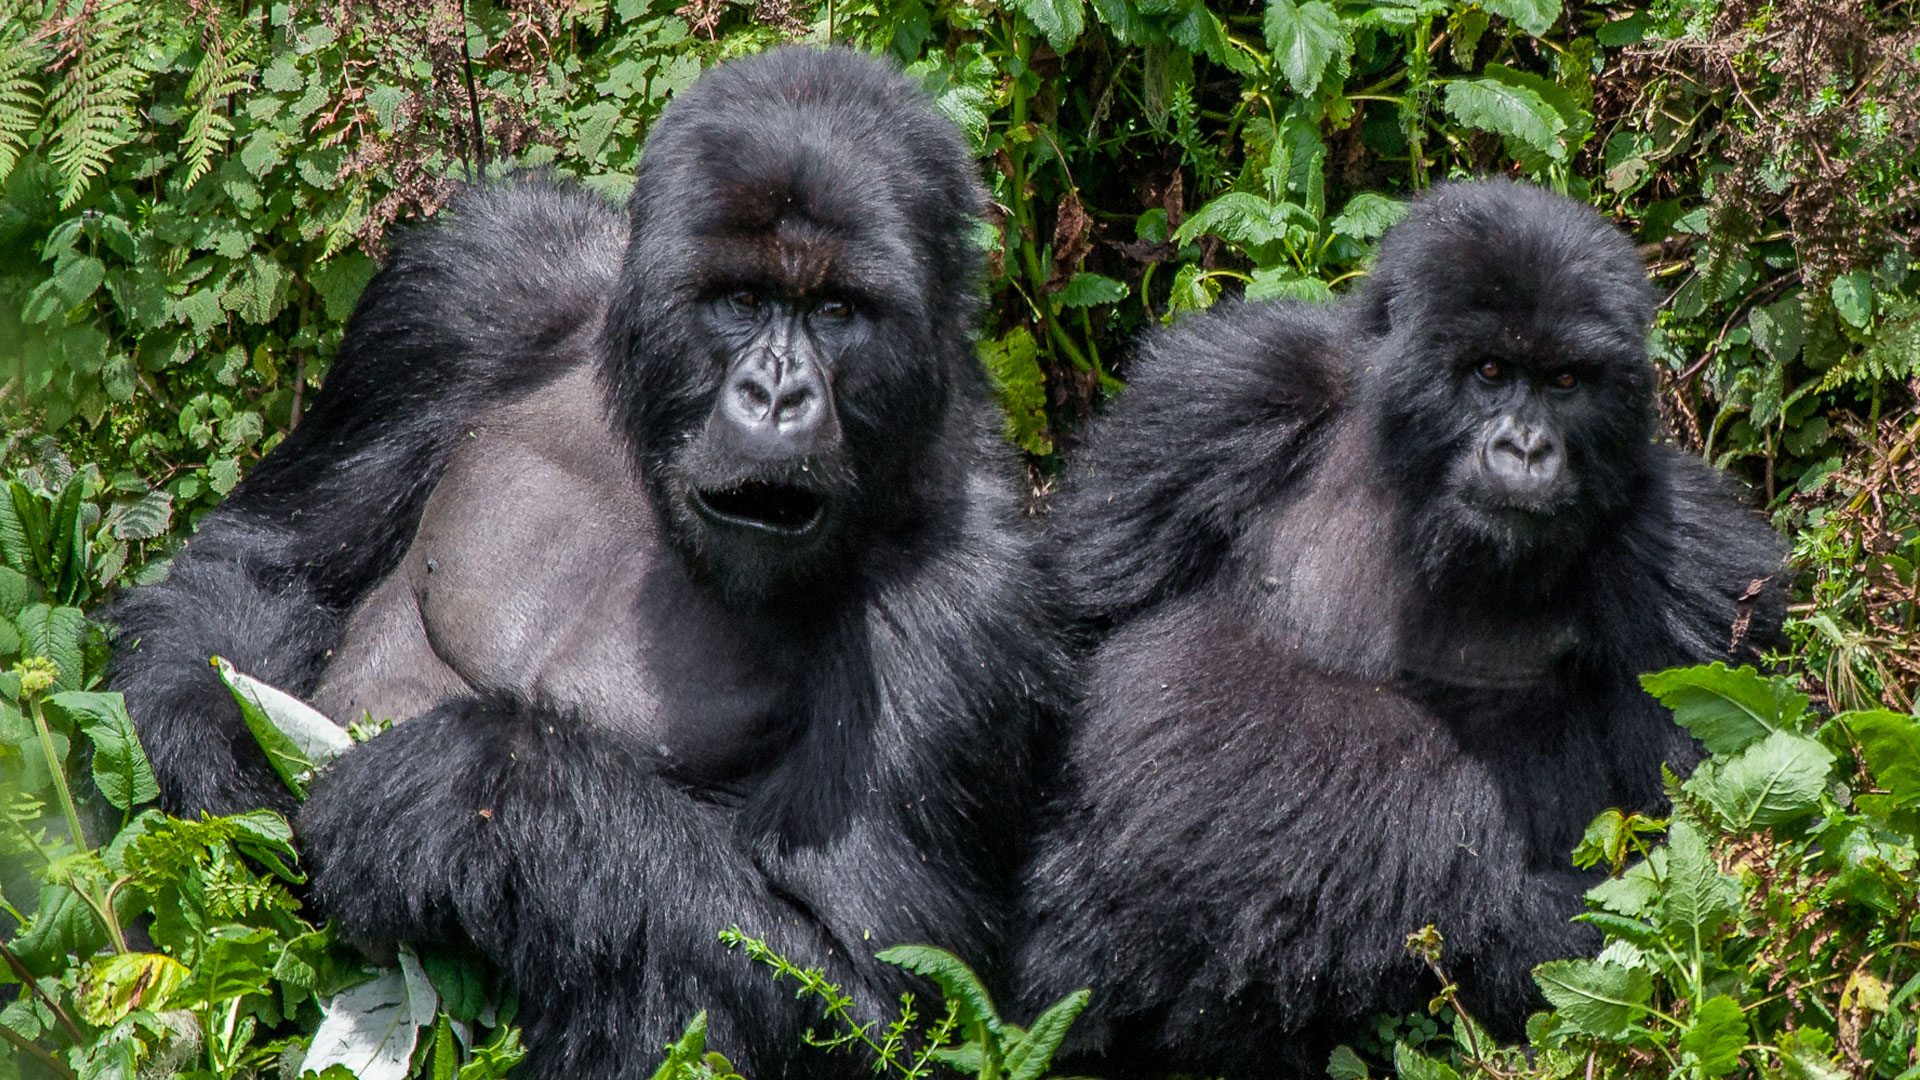 The Busingye Gorilla Family